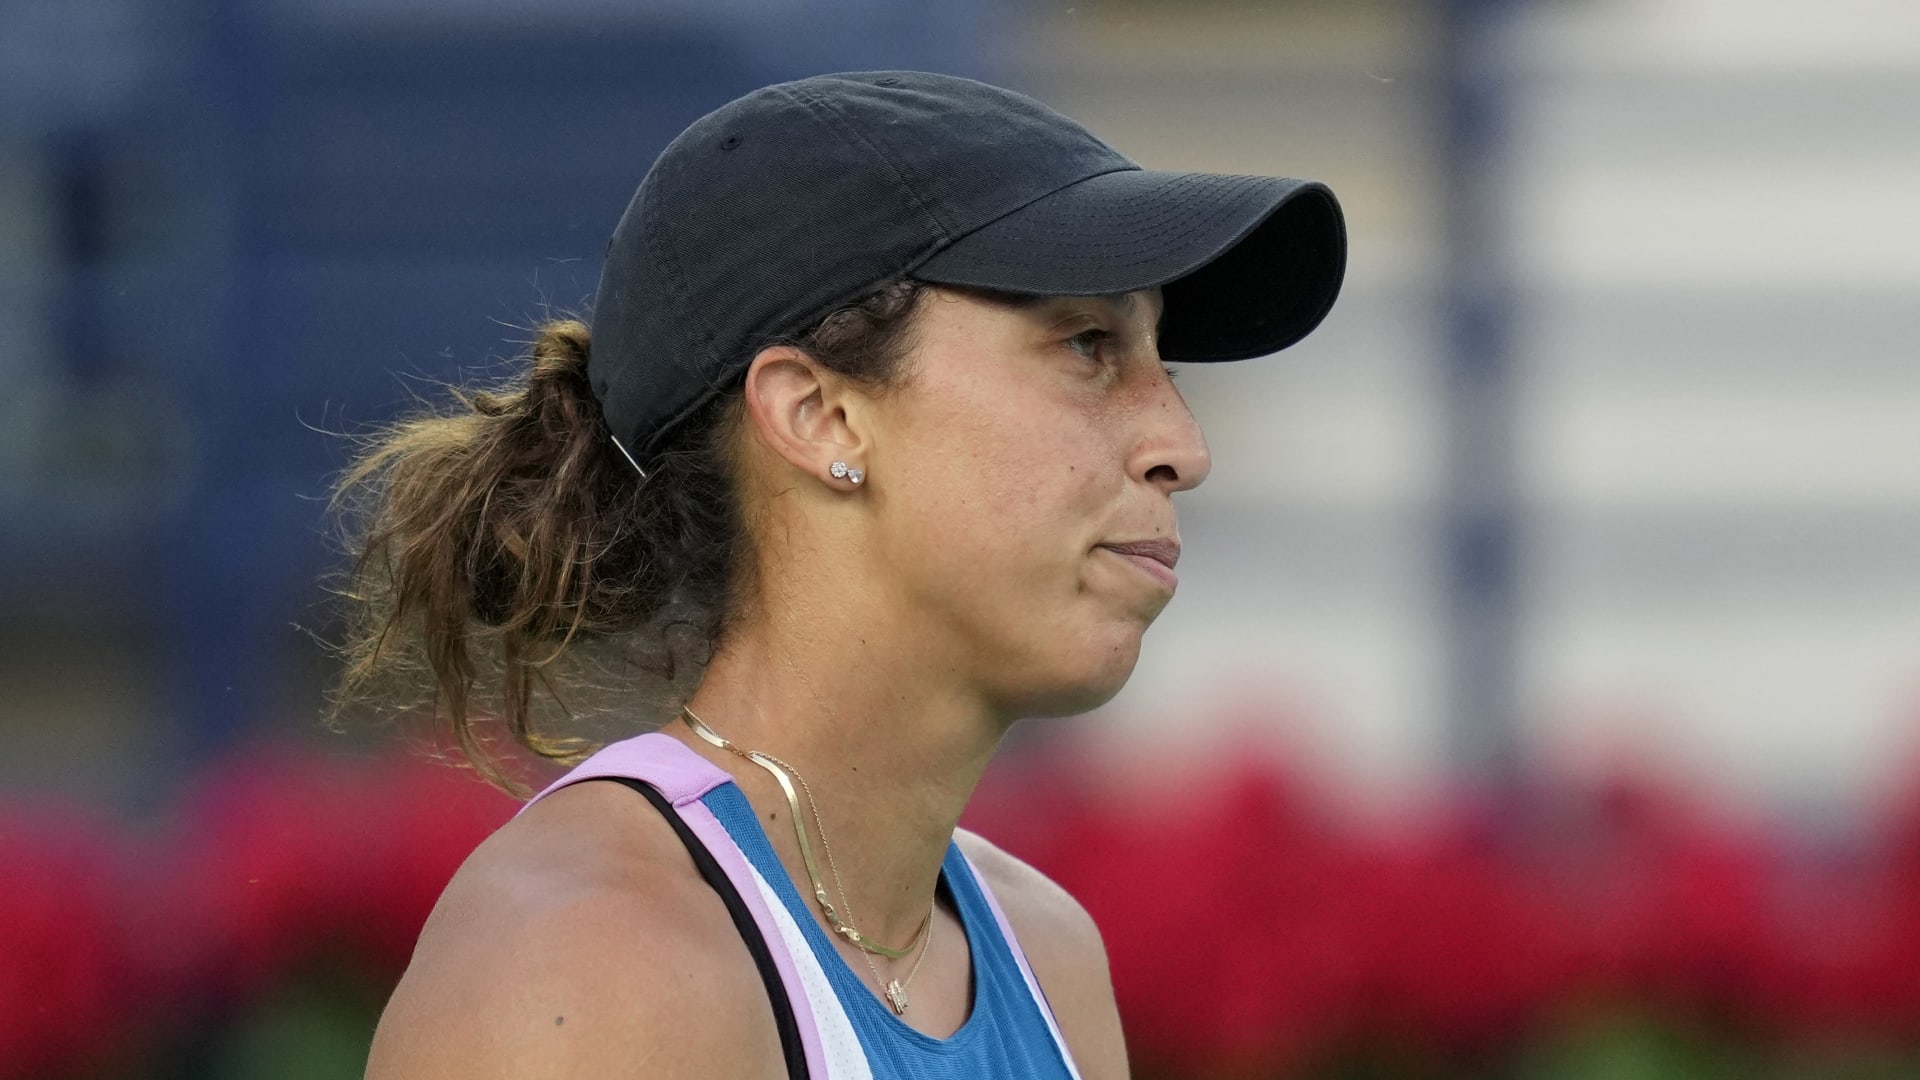 Dubai: Krejcikova comes back from 6-0, 3-1 down to defeat Sabalenka